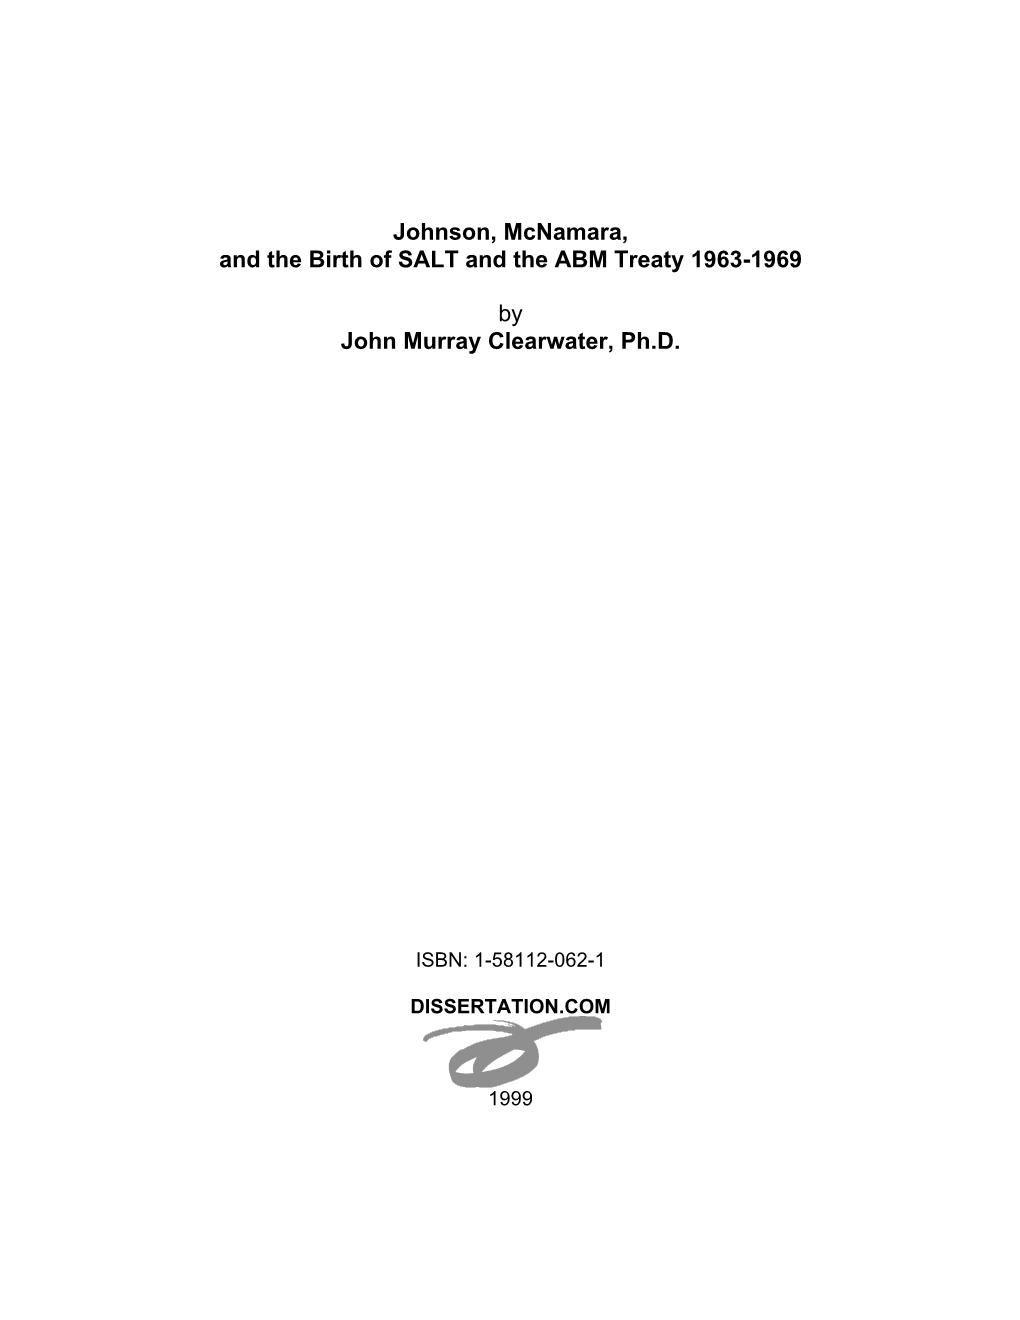 Johnson, Mcnamara, and the Birth of SALT and the ABM Treaty 1963-1969